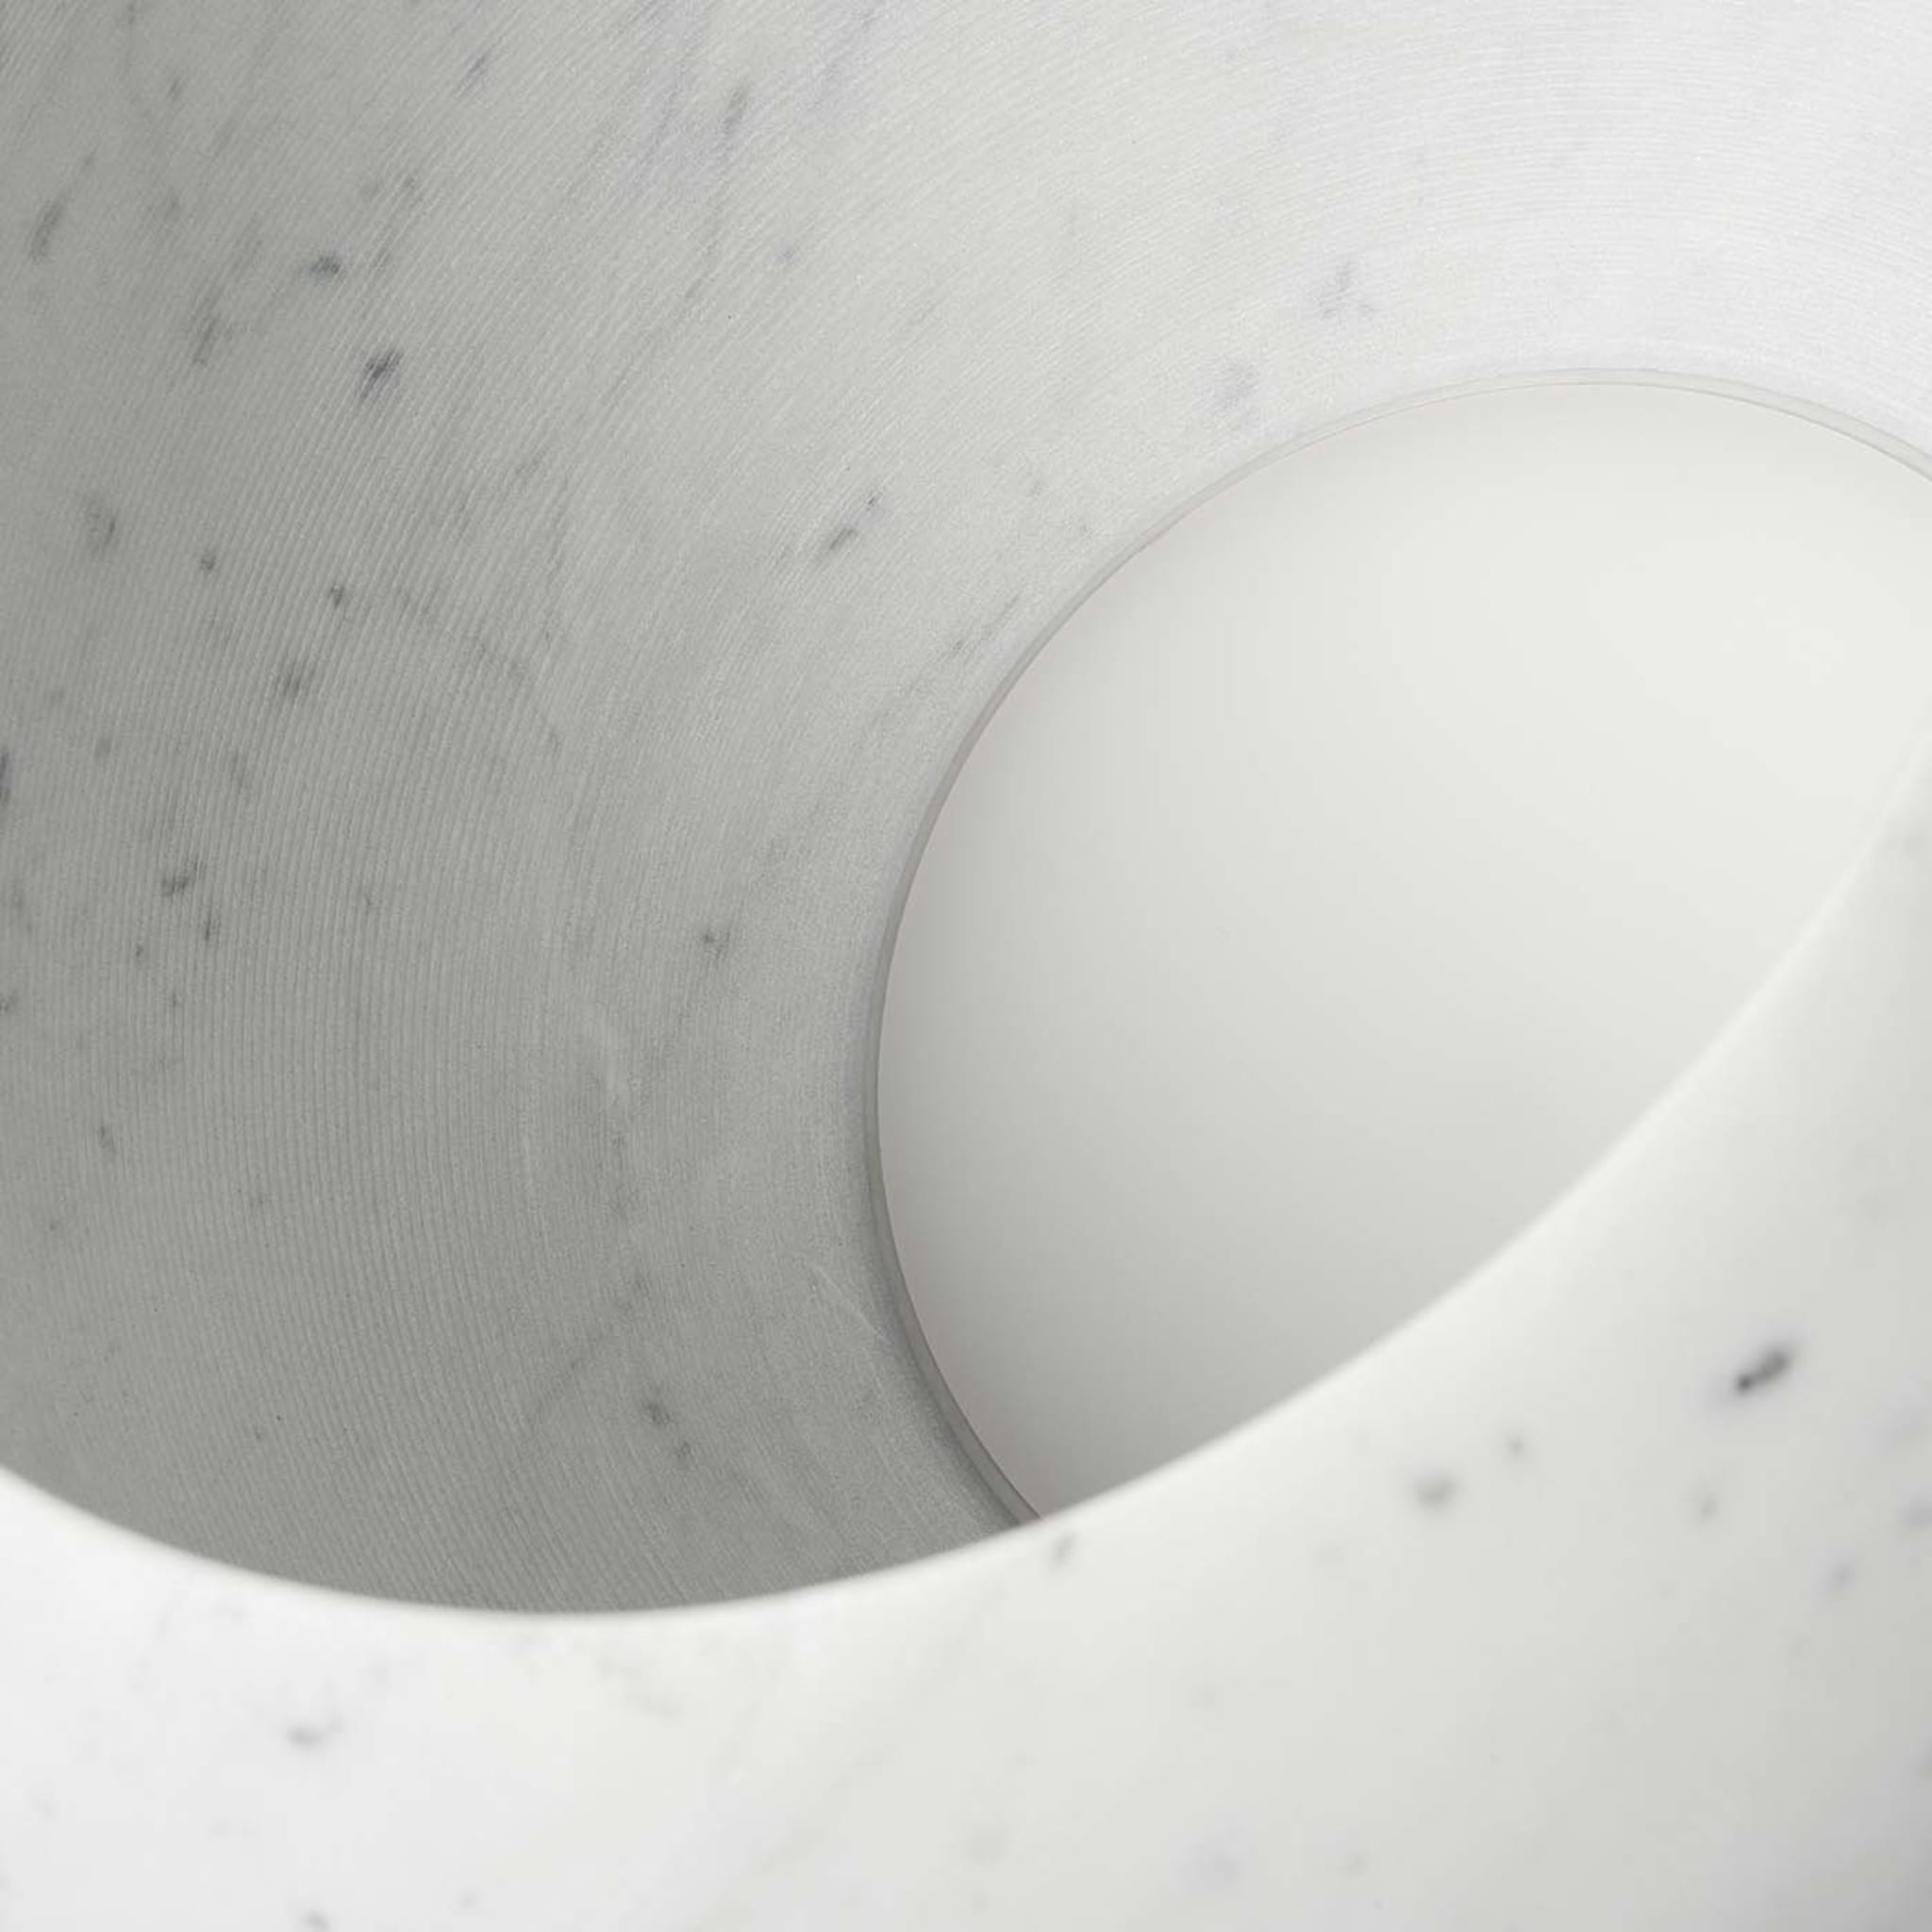 Urano 50 Floor Lamp by Elisa Ossino - Alternative view 2